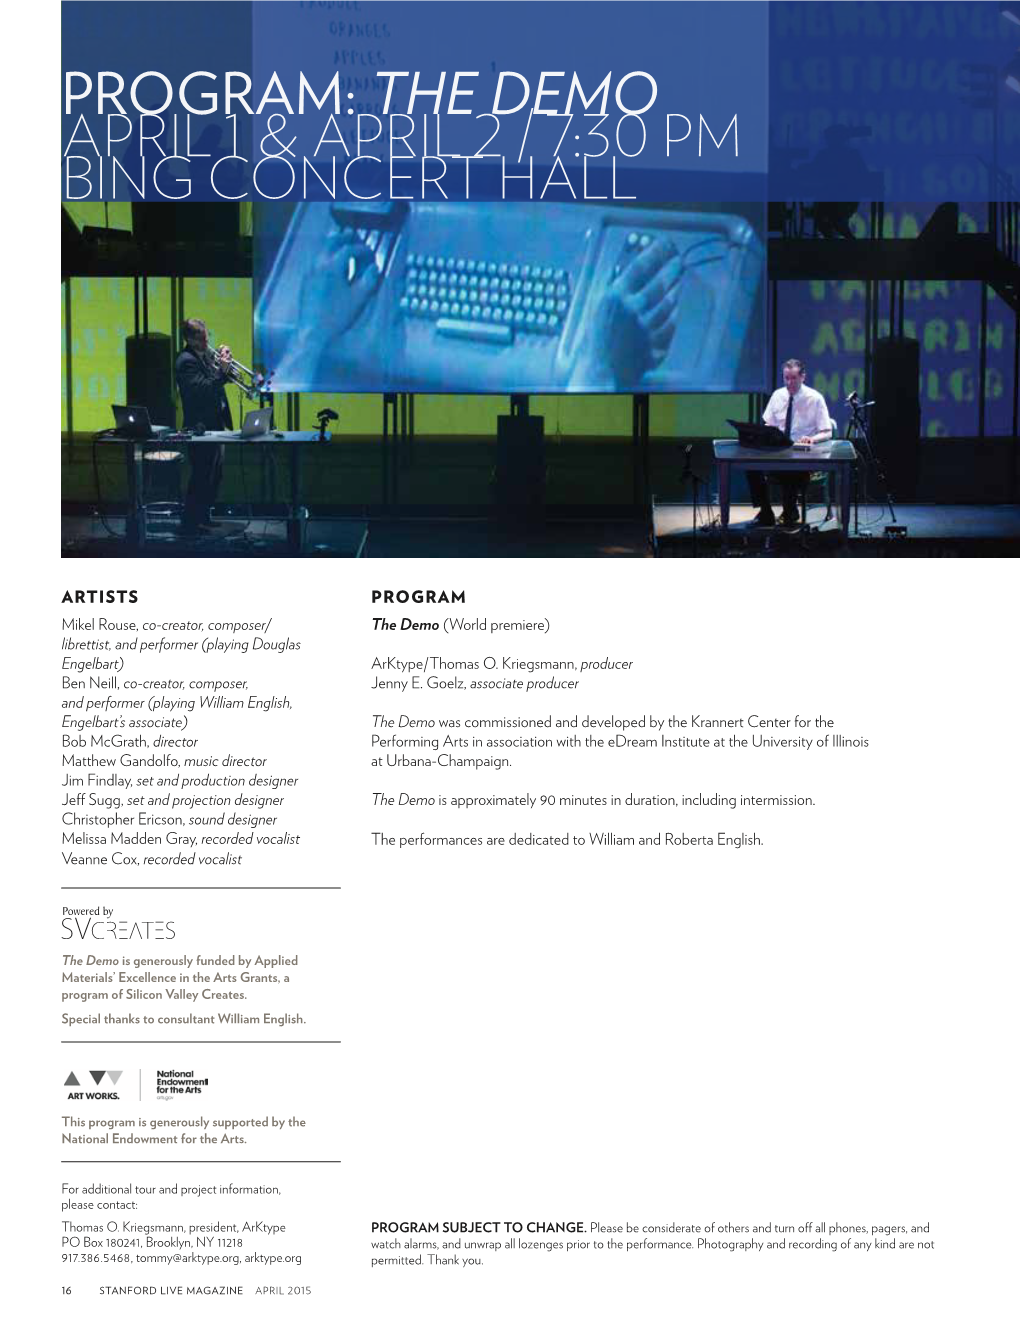 The Demo April 1 & April 2 / 7:30 Pm Bing Concert Hall